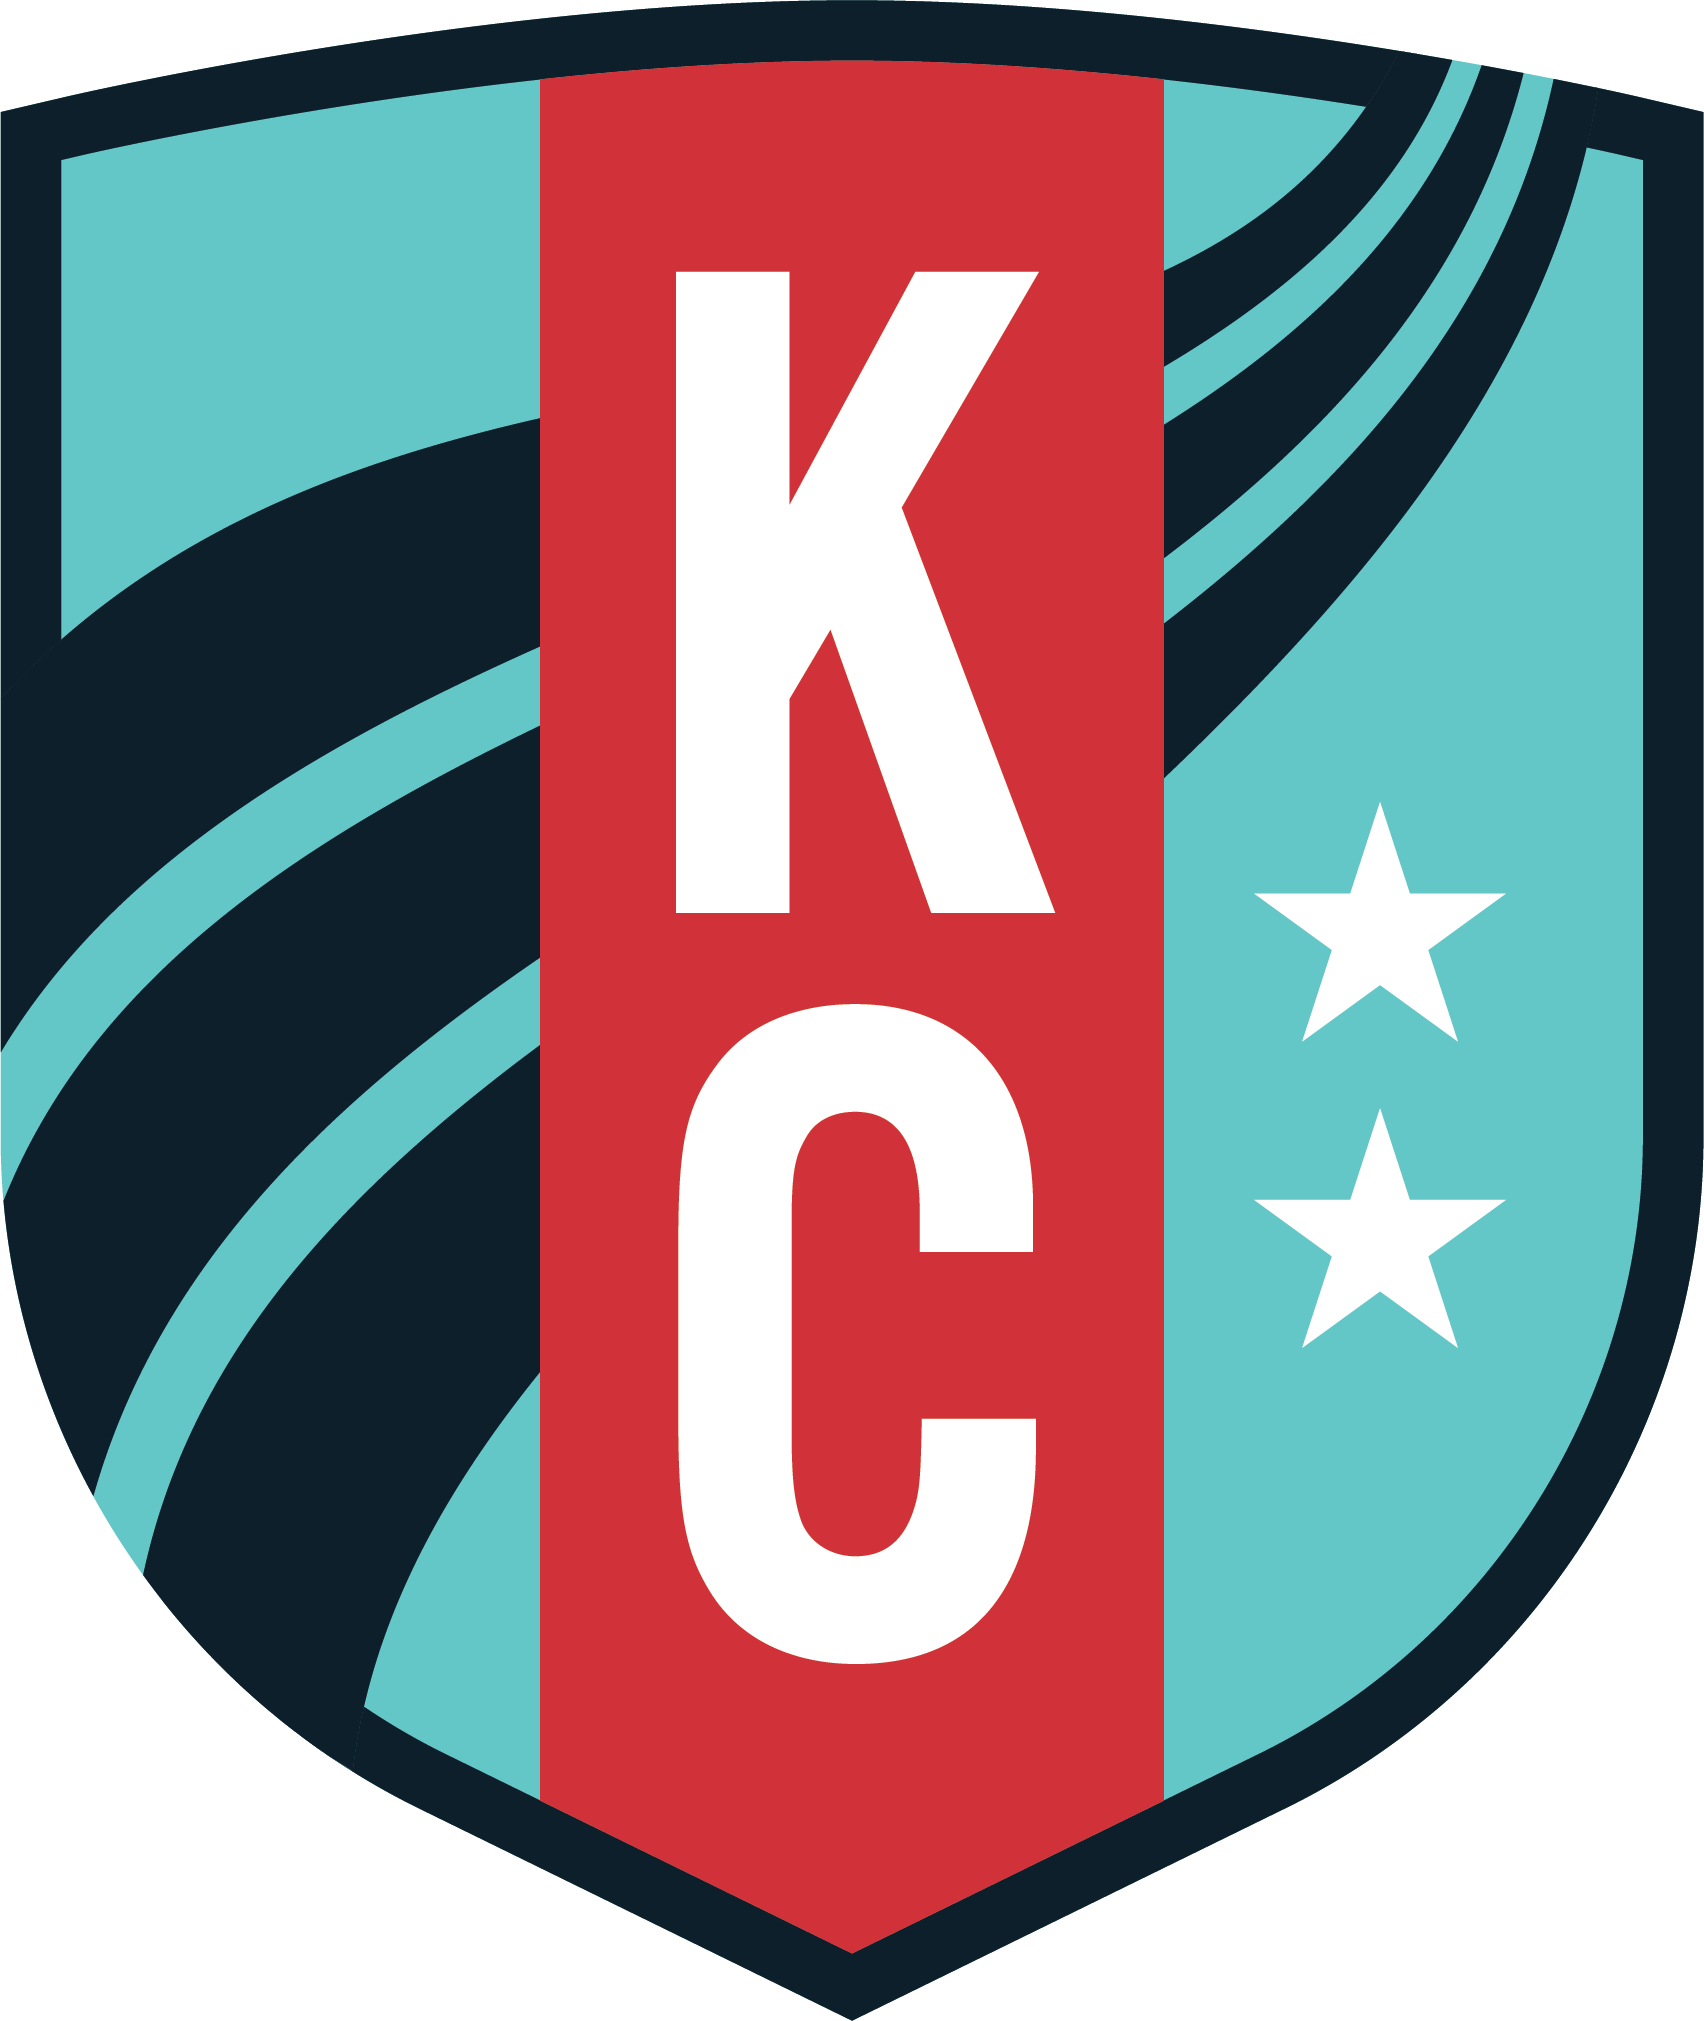 Kansas City Current logo